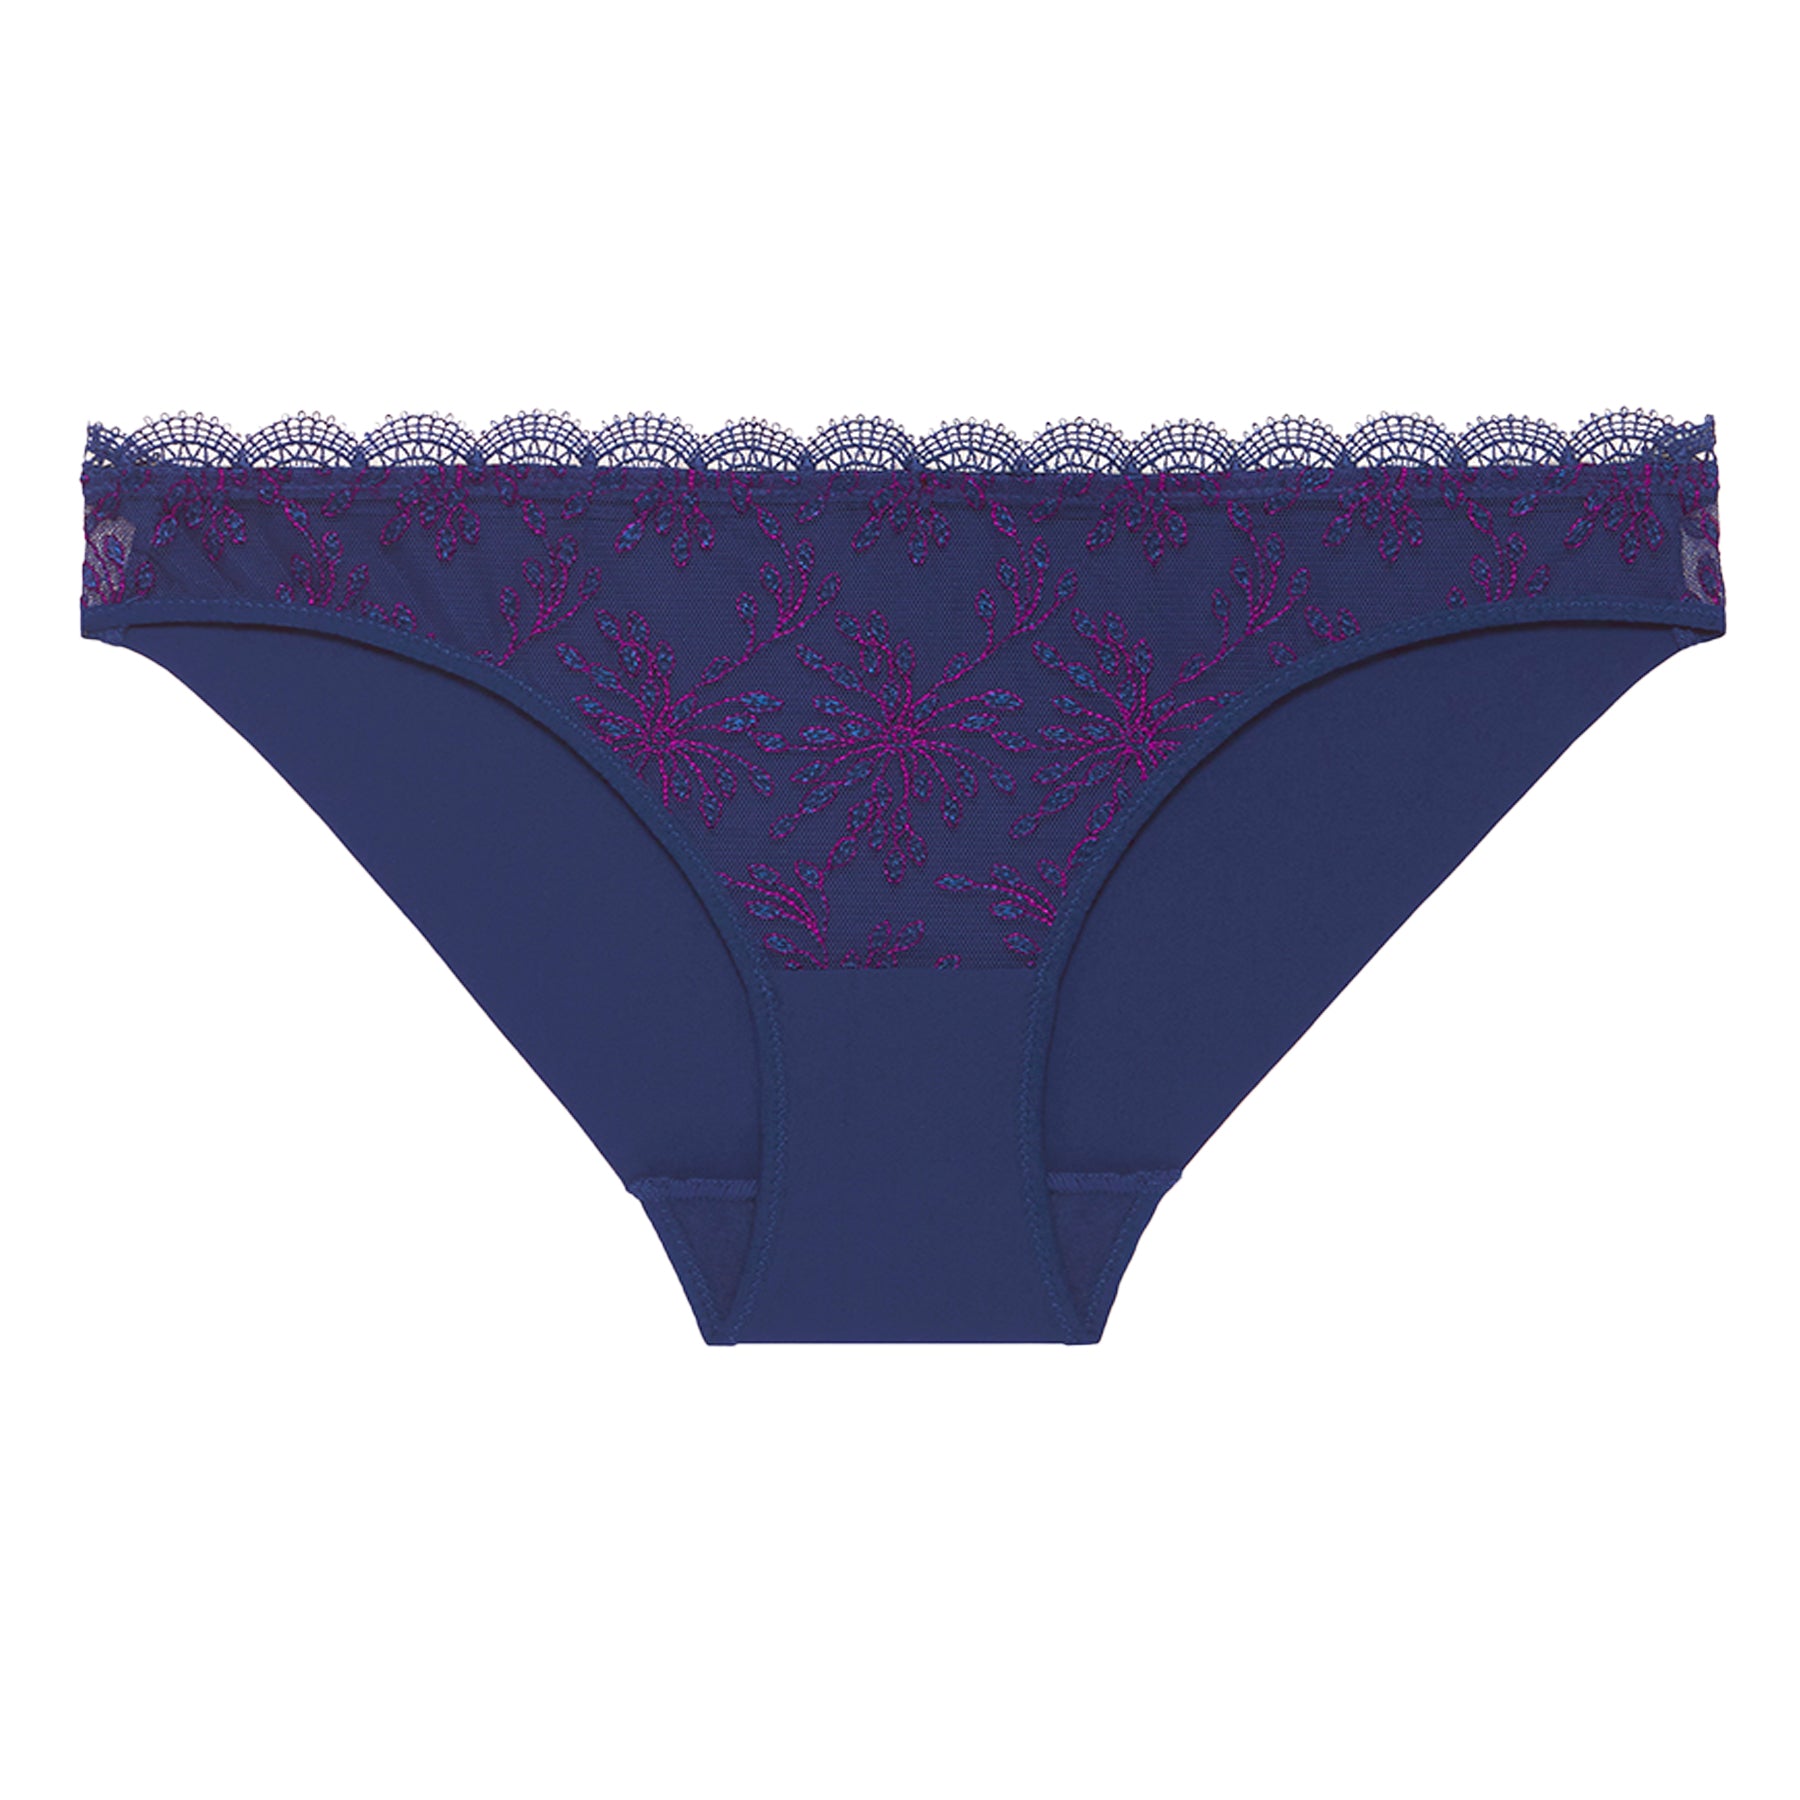 Purple Lace Bra With Matching Panty – Hosiery Etc